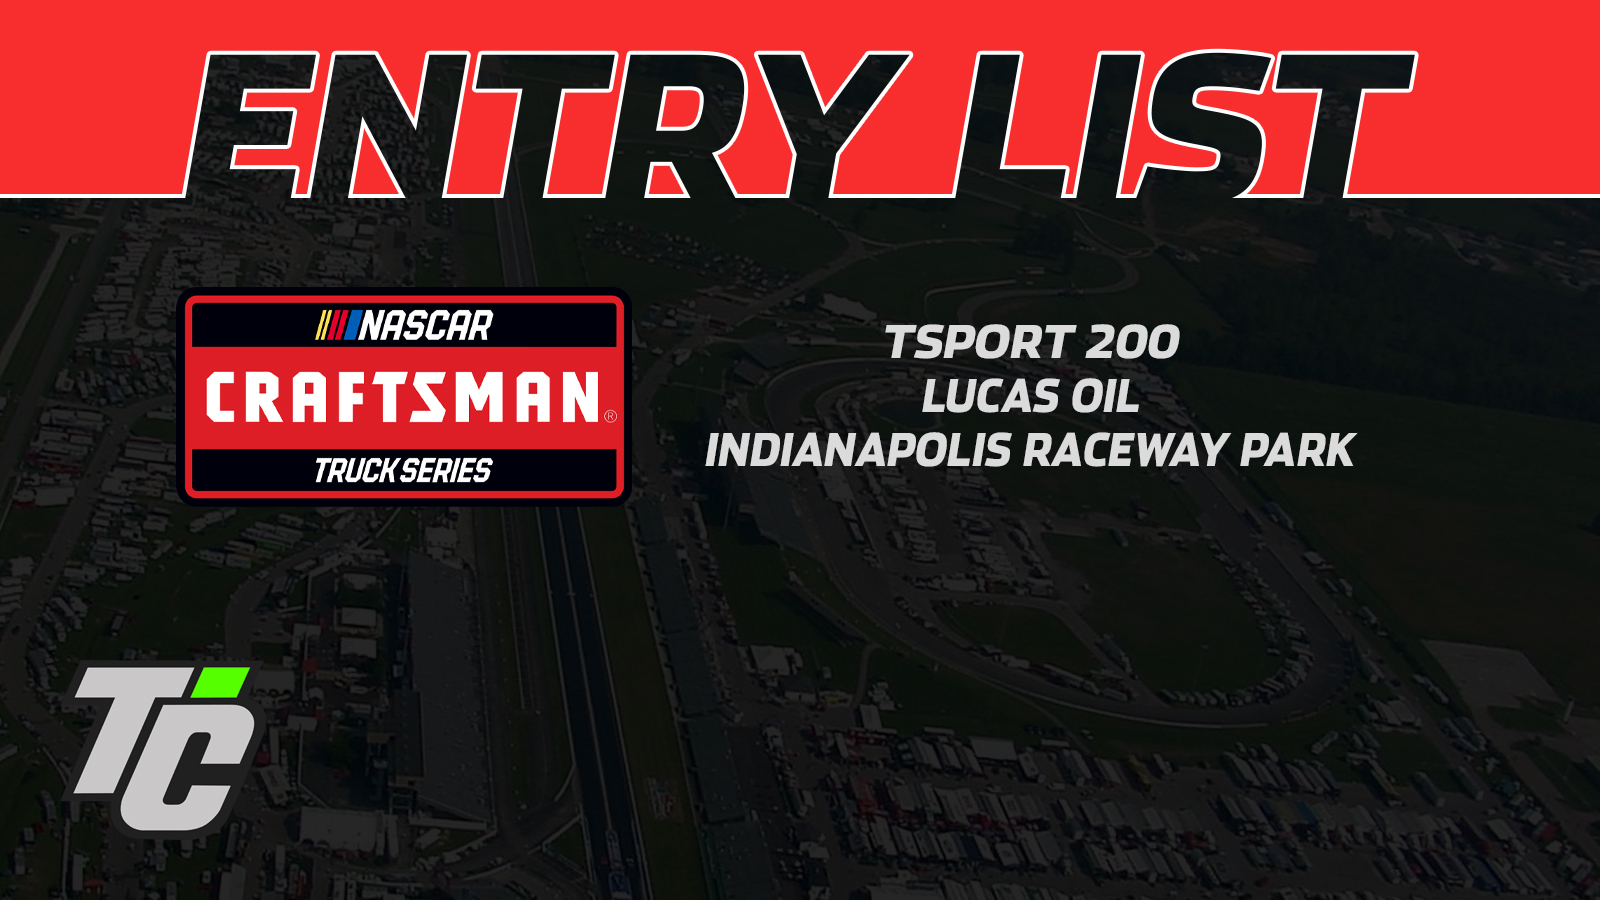 TSPORT 200 entry list NASCAR Craftsman Truck Series Lucas Oil Indianapolis Raceway Park IRP